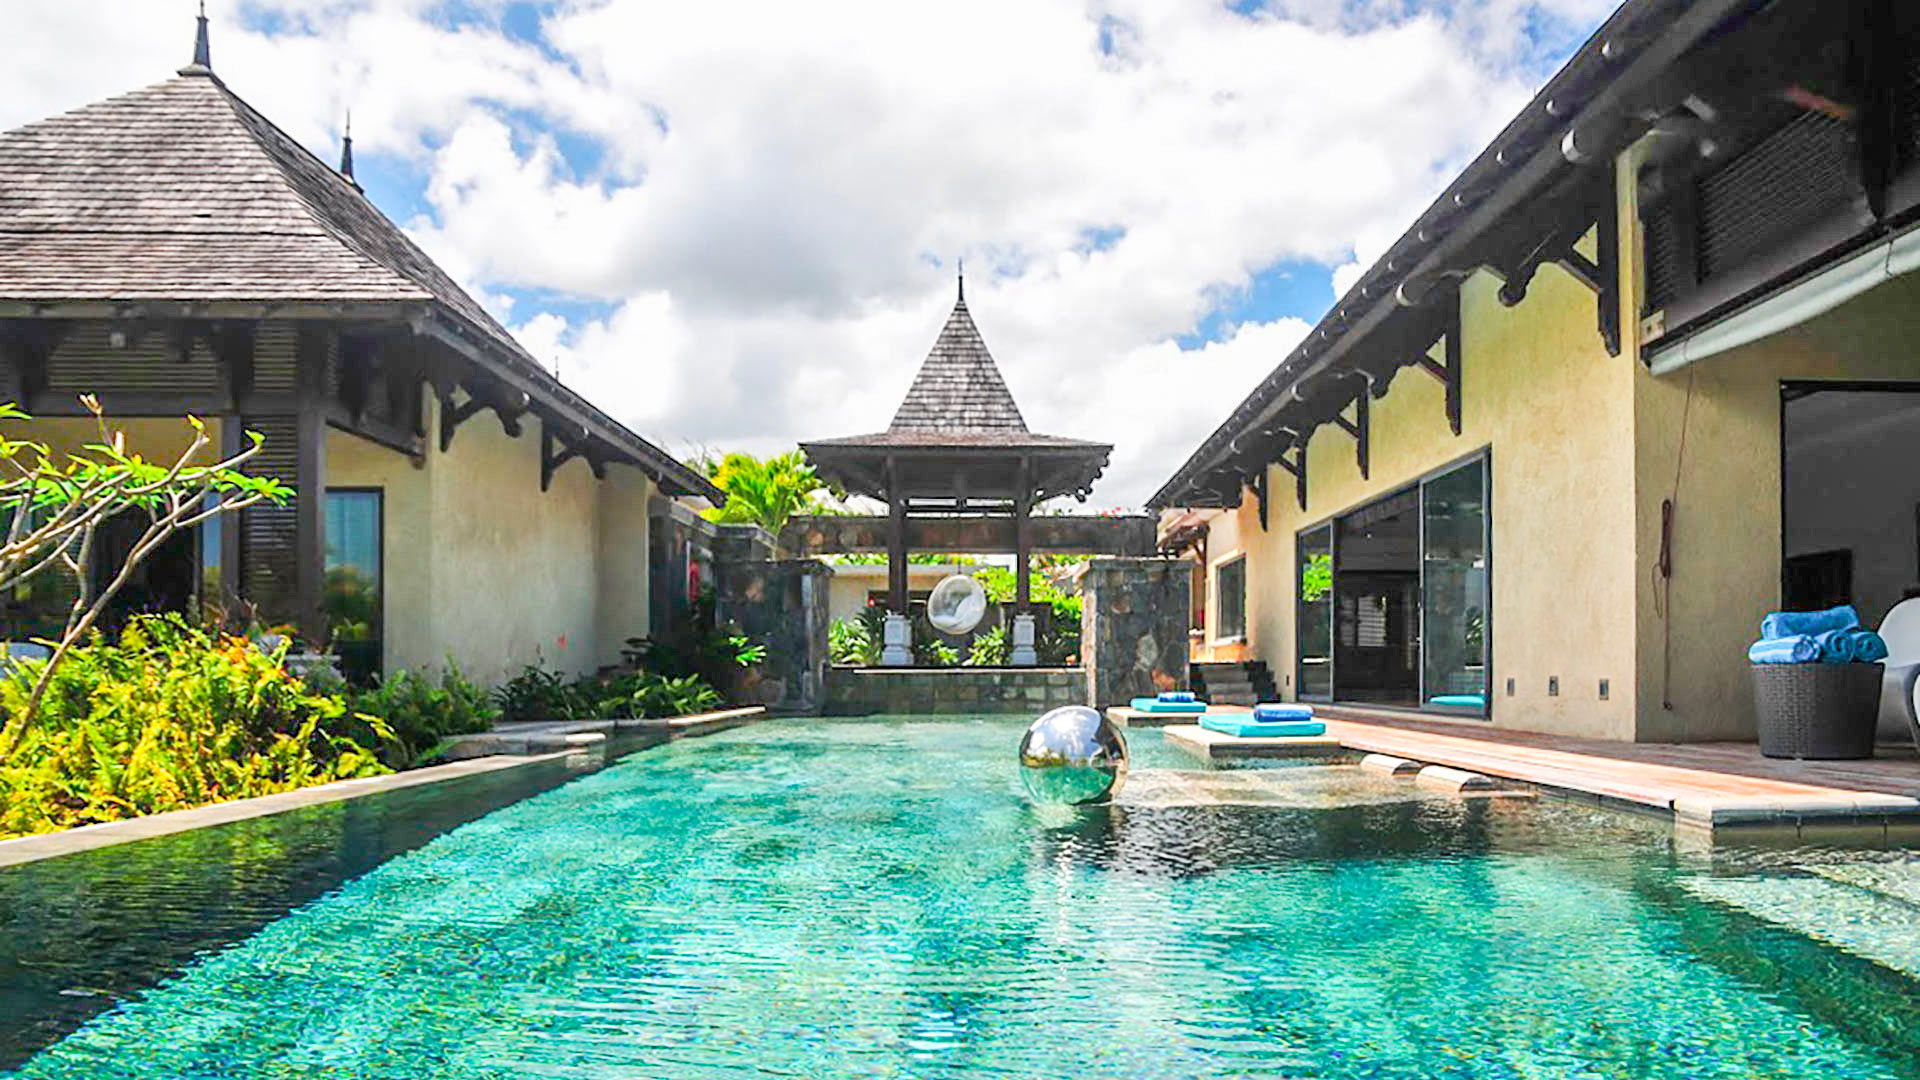 Villa Villa Olvea, Ferienvilla mieten Mauritius - Südwesten